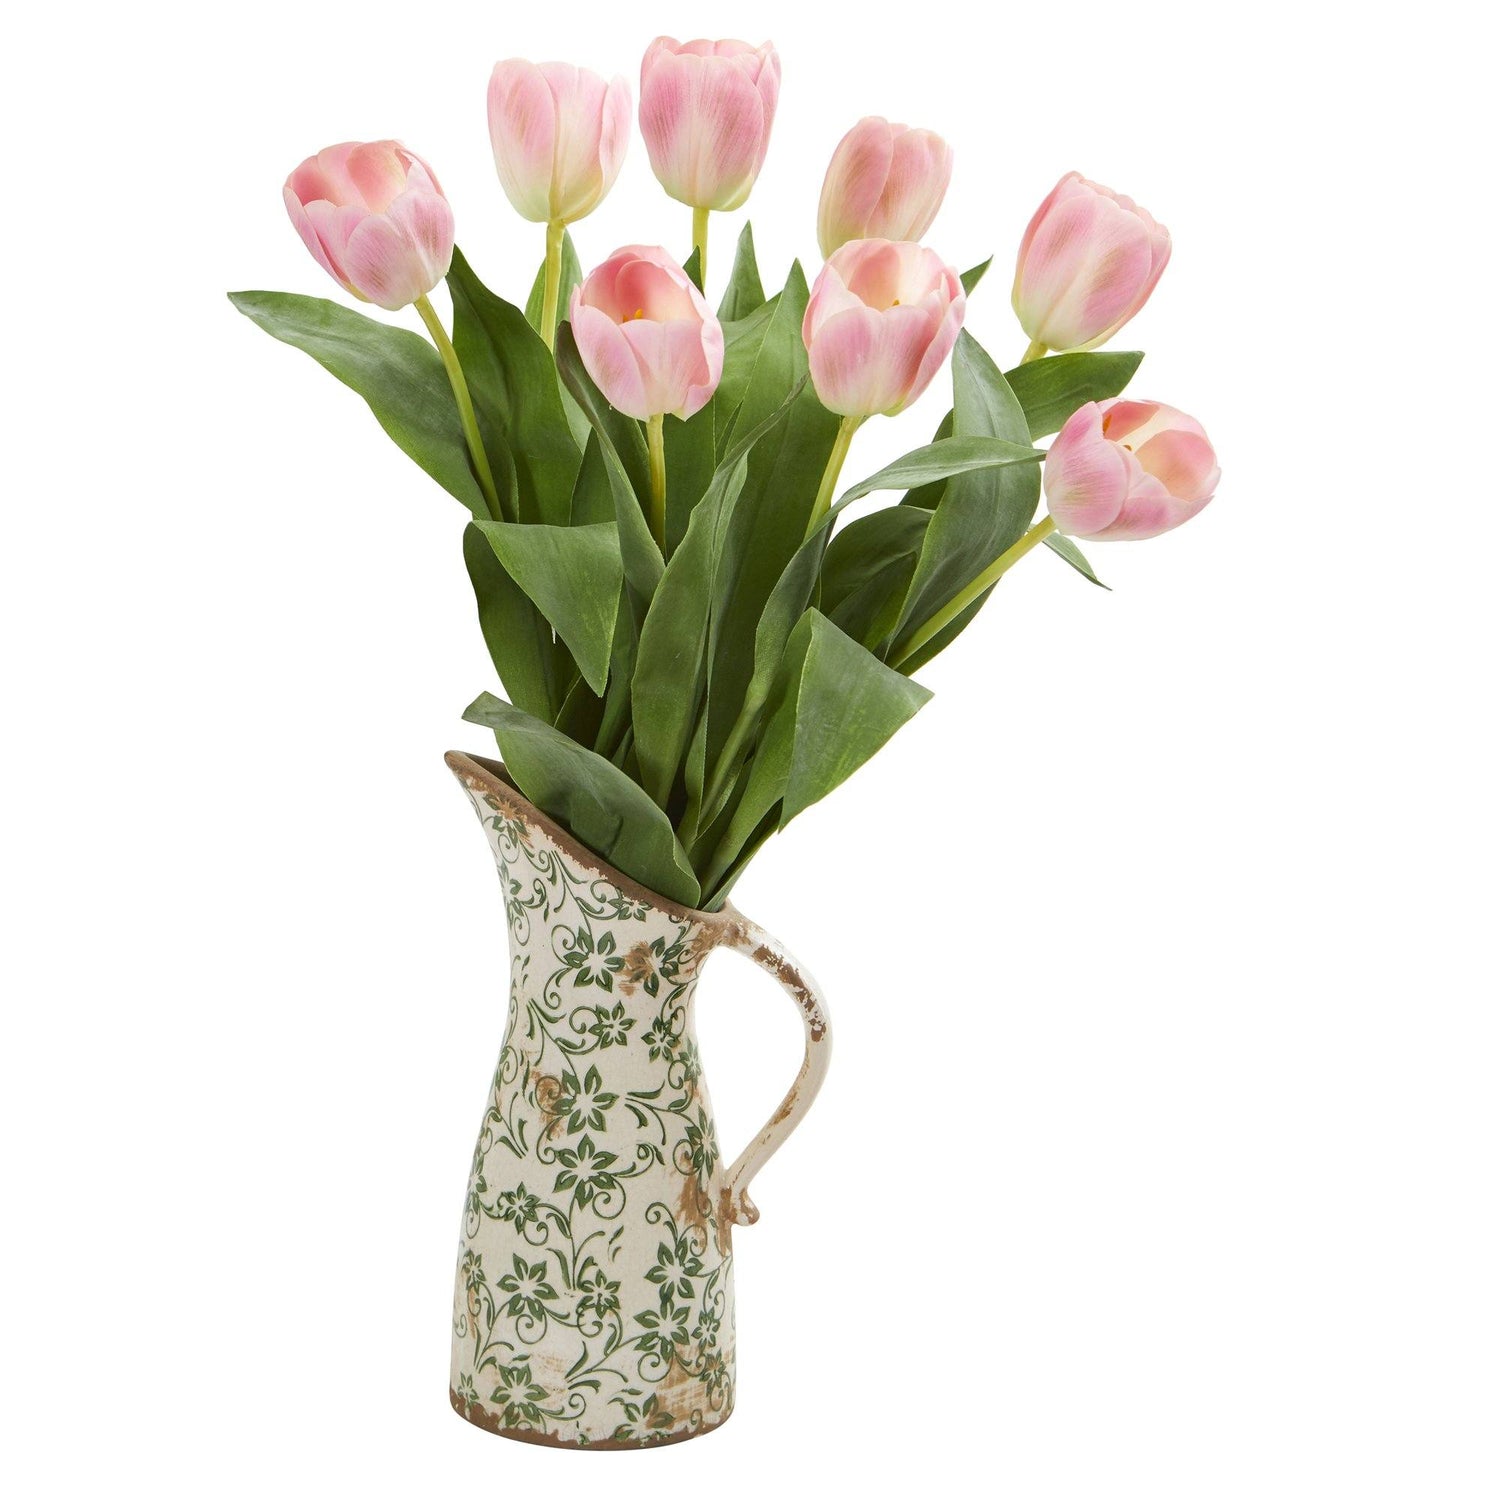 19” Tulip Artificial Arrangement in Floral Pitcher